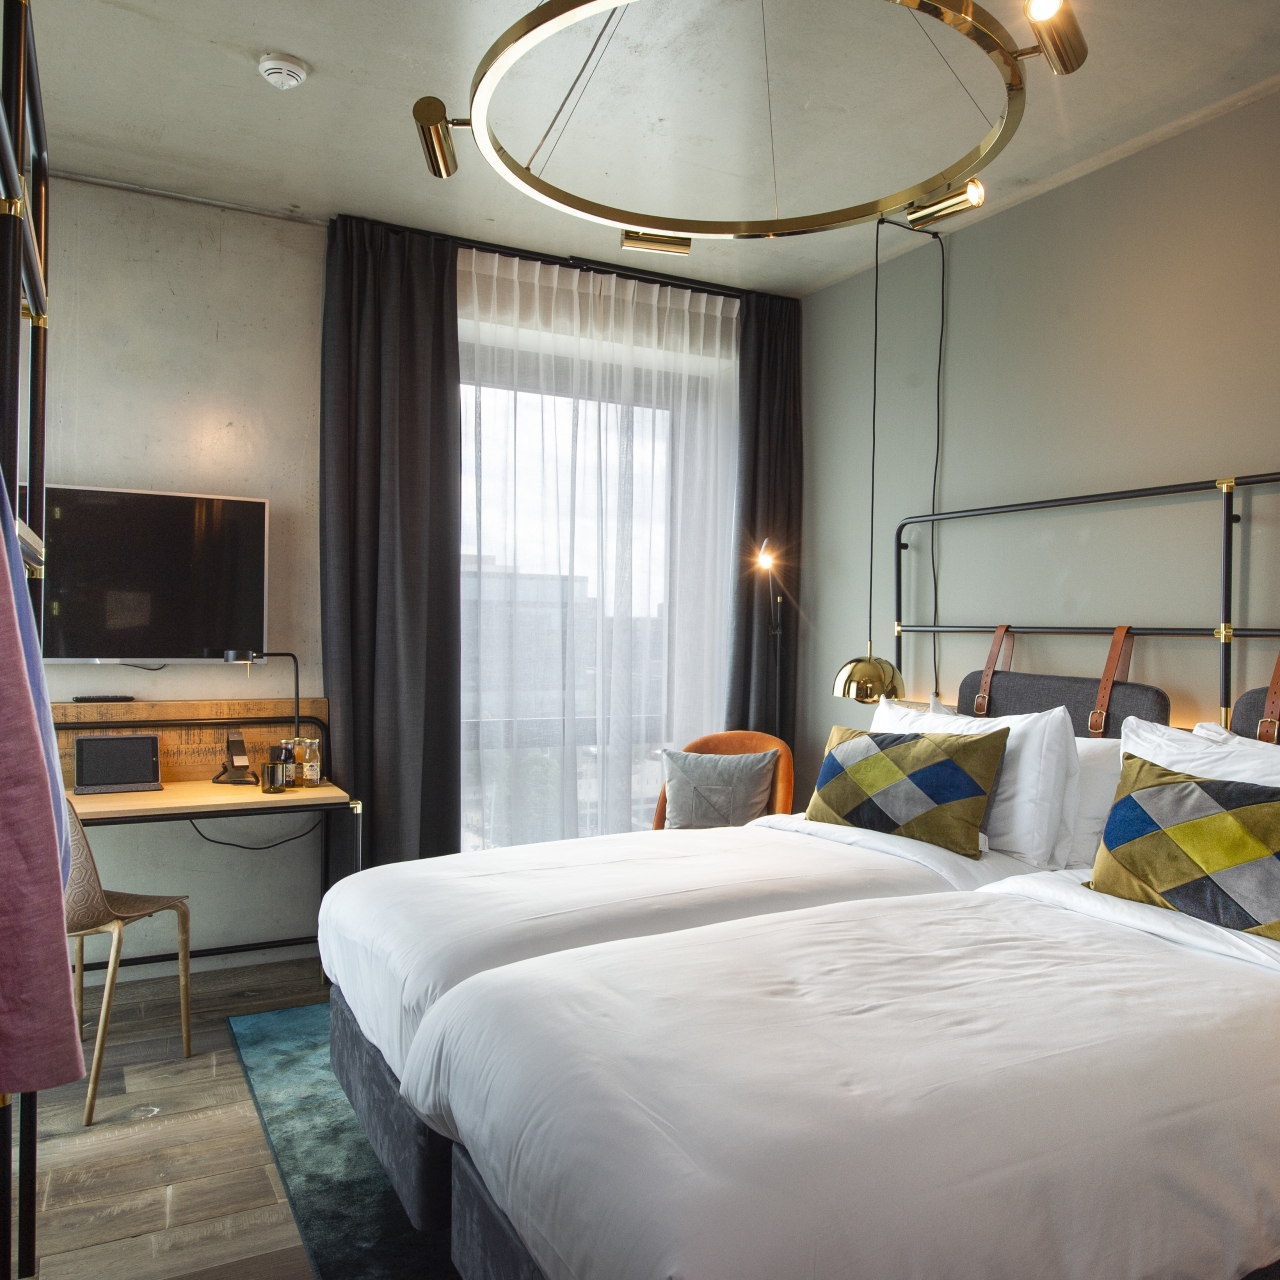 Four Elements Hotel Amsterdam barato con HRS